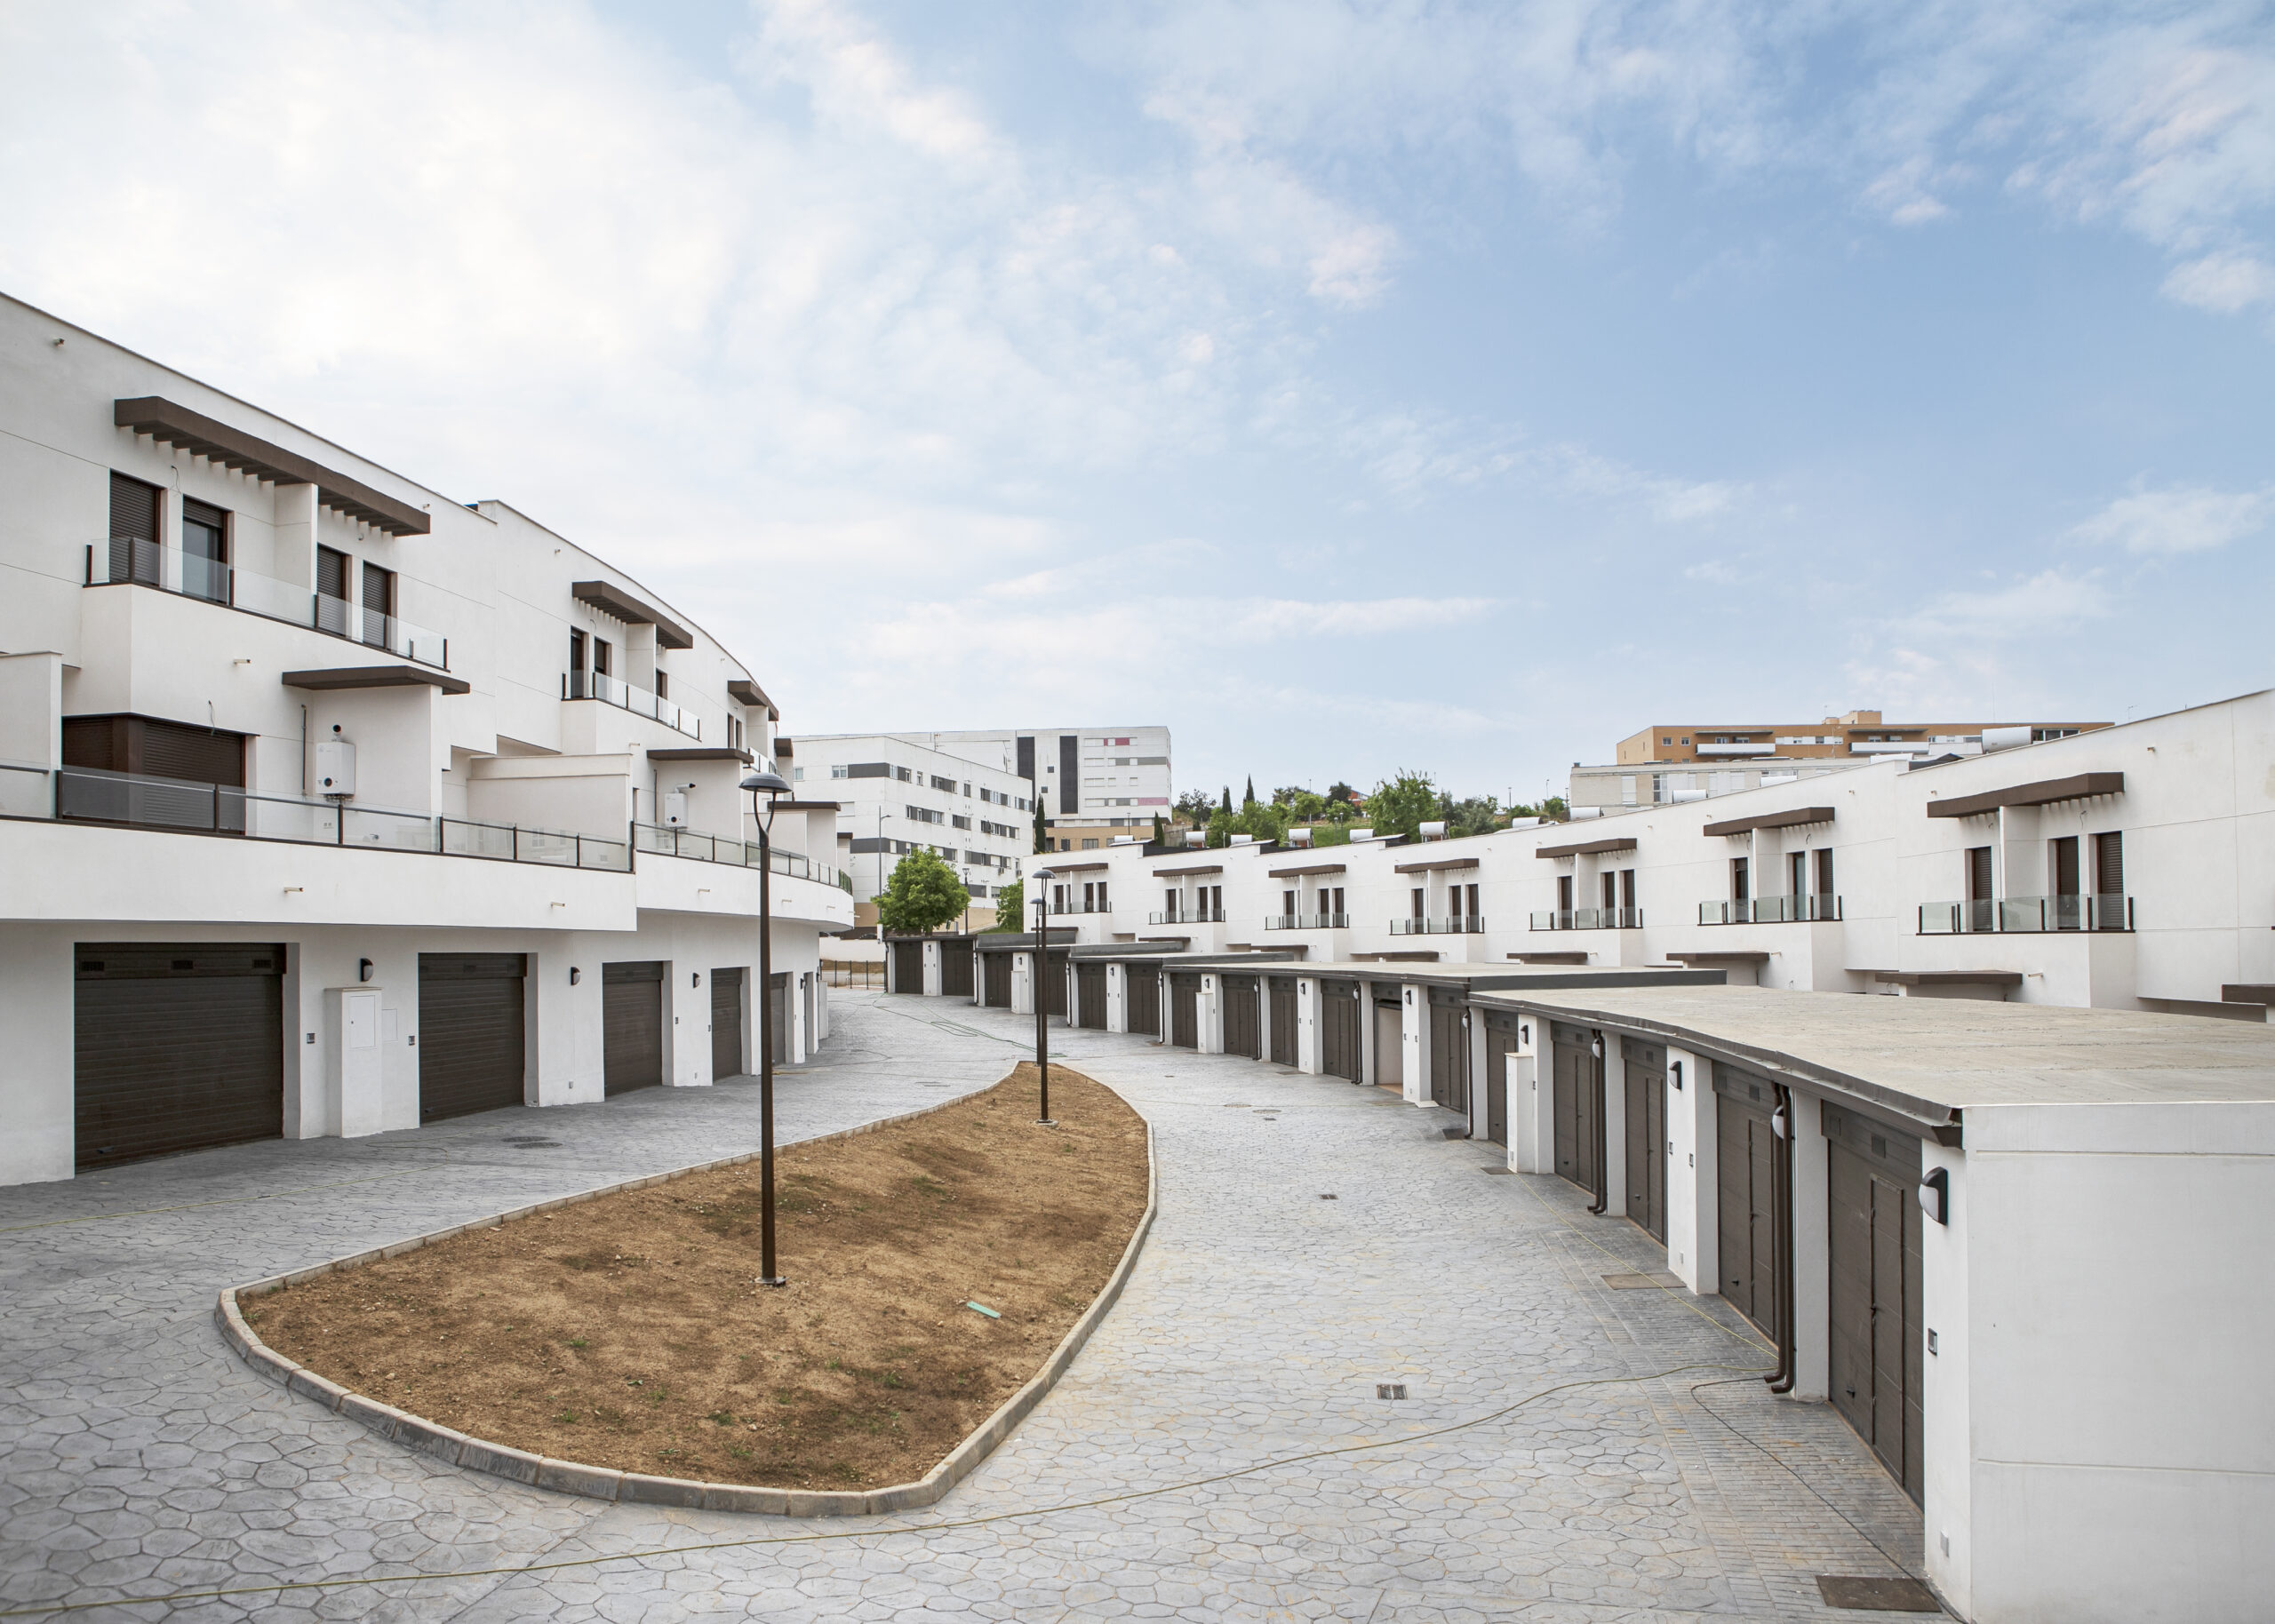 20220426 conjunto residencial Badajoz 008 scaled